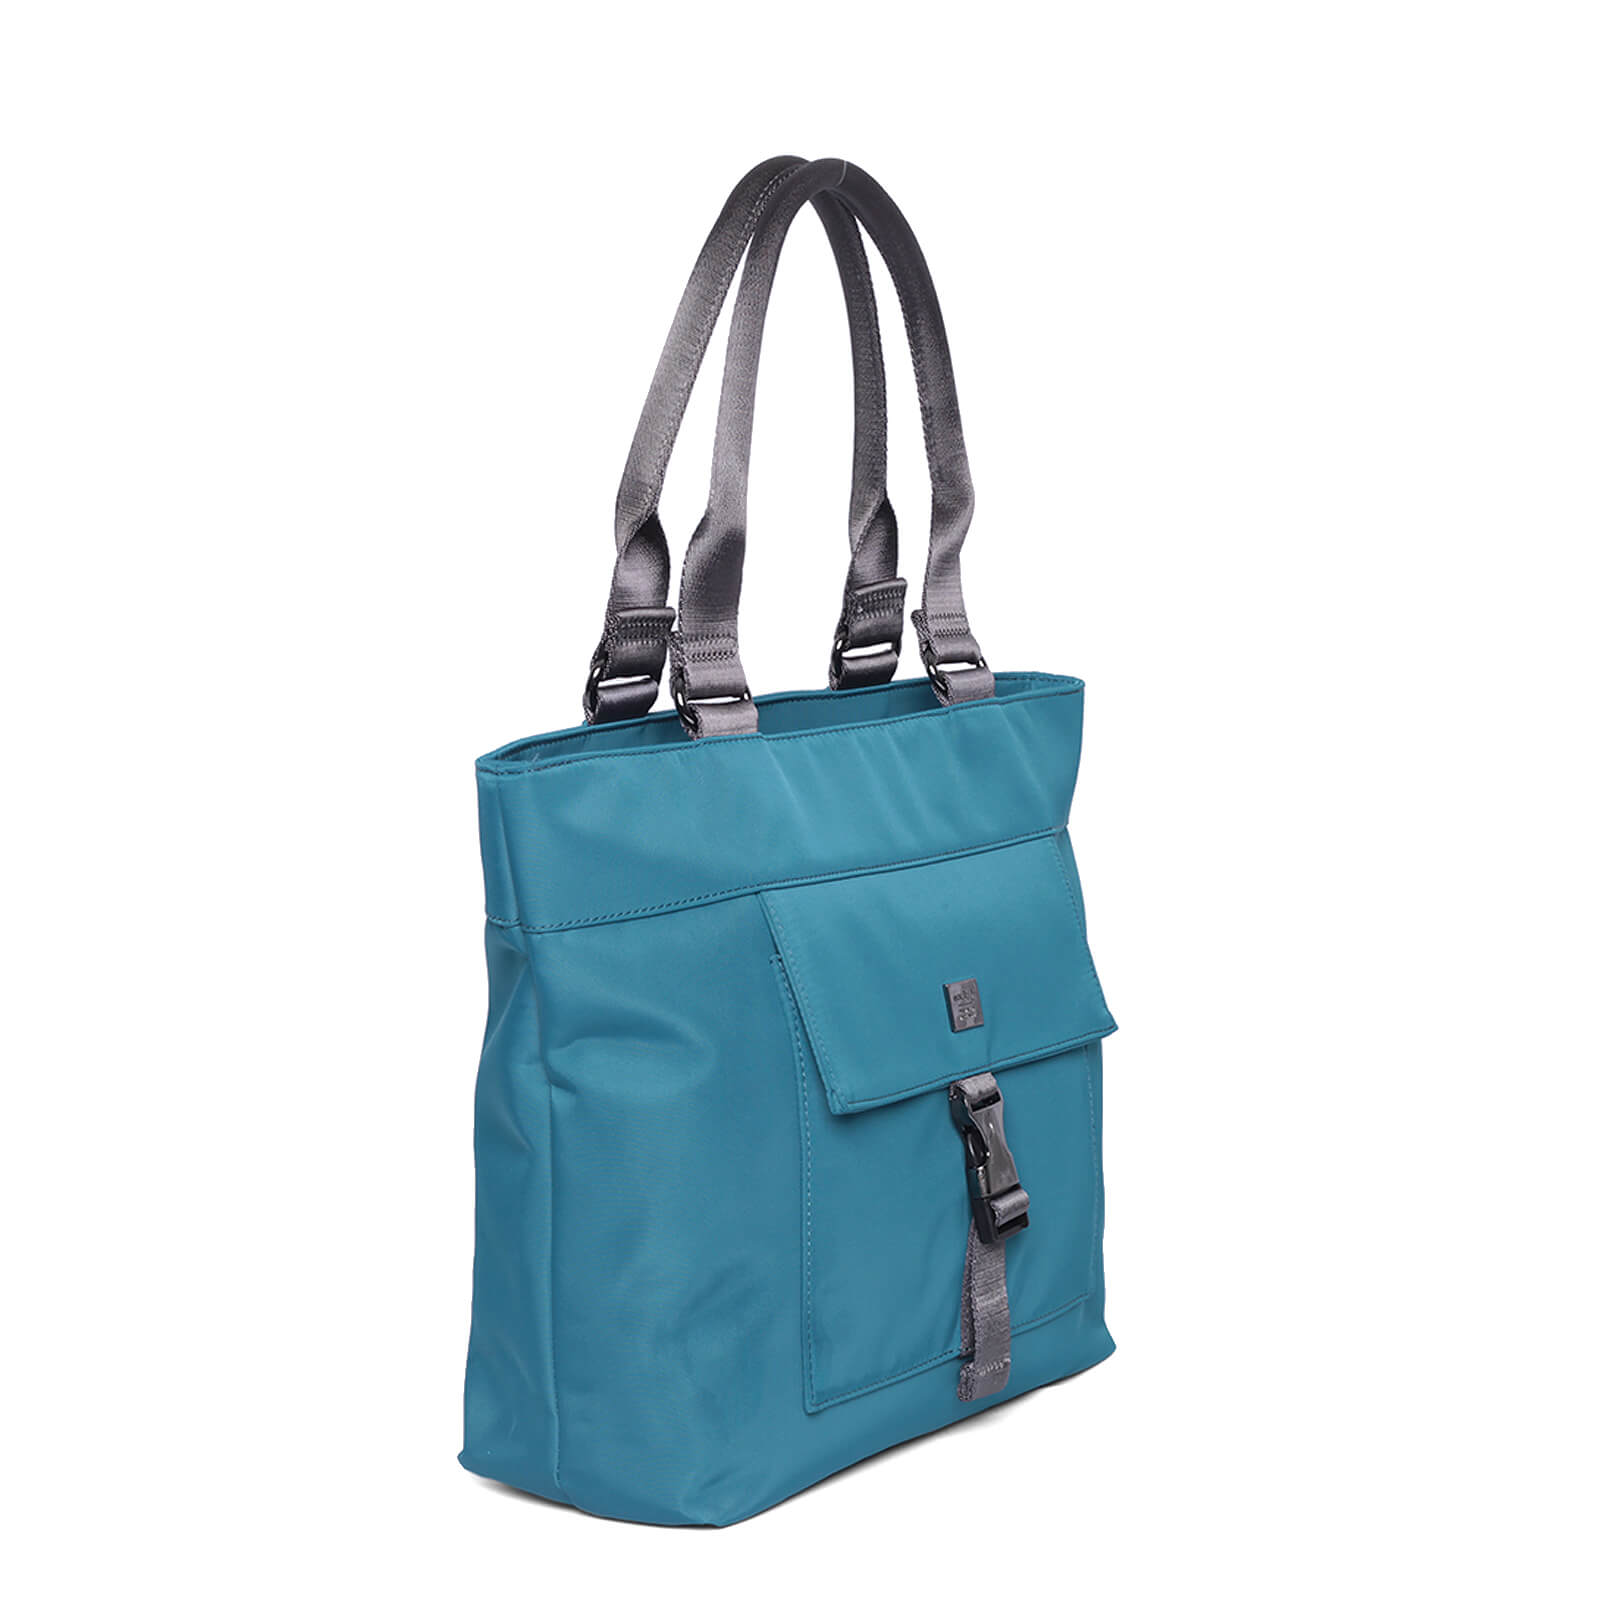 bolsa-shopping-bag-nylon-bnt-61039-unclek-azul-2